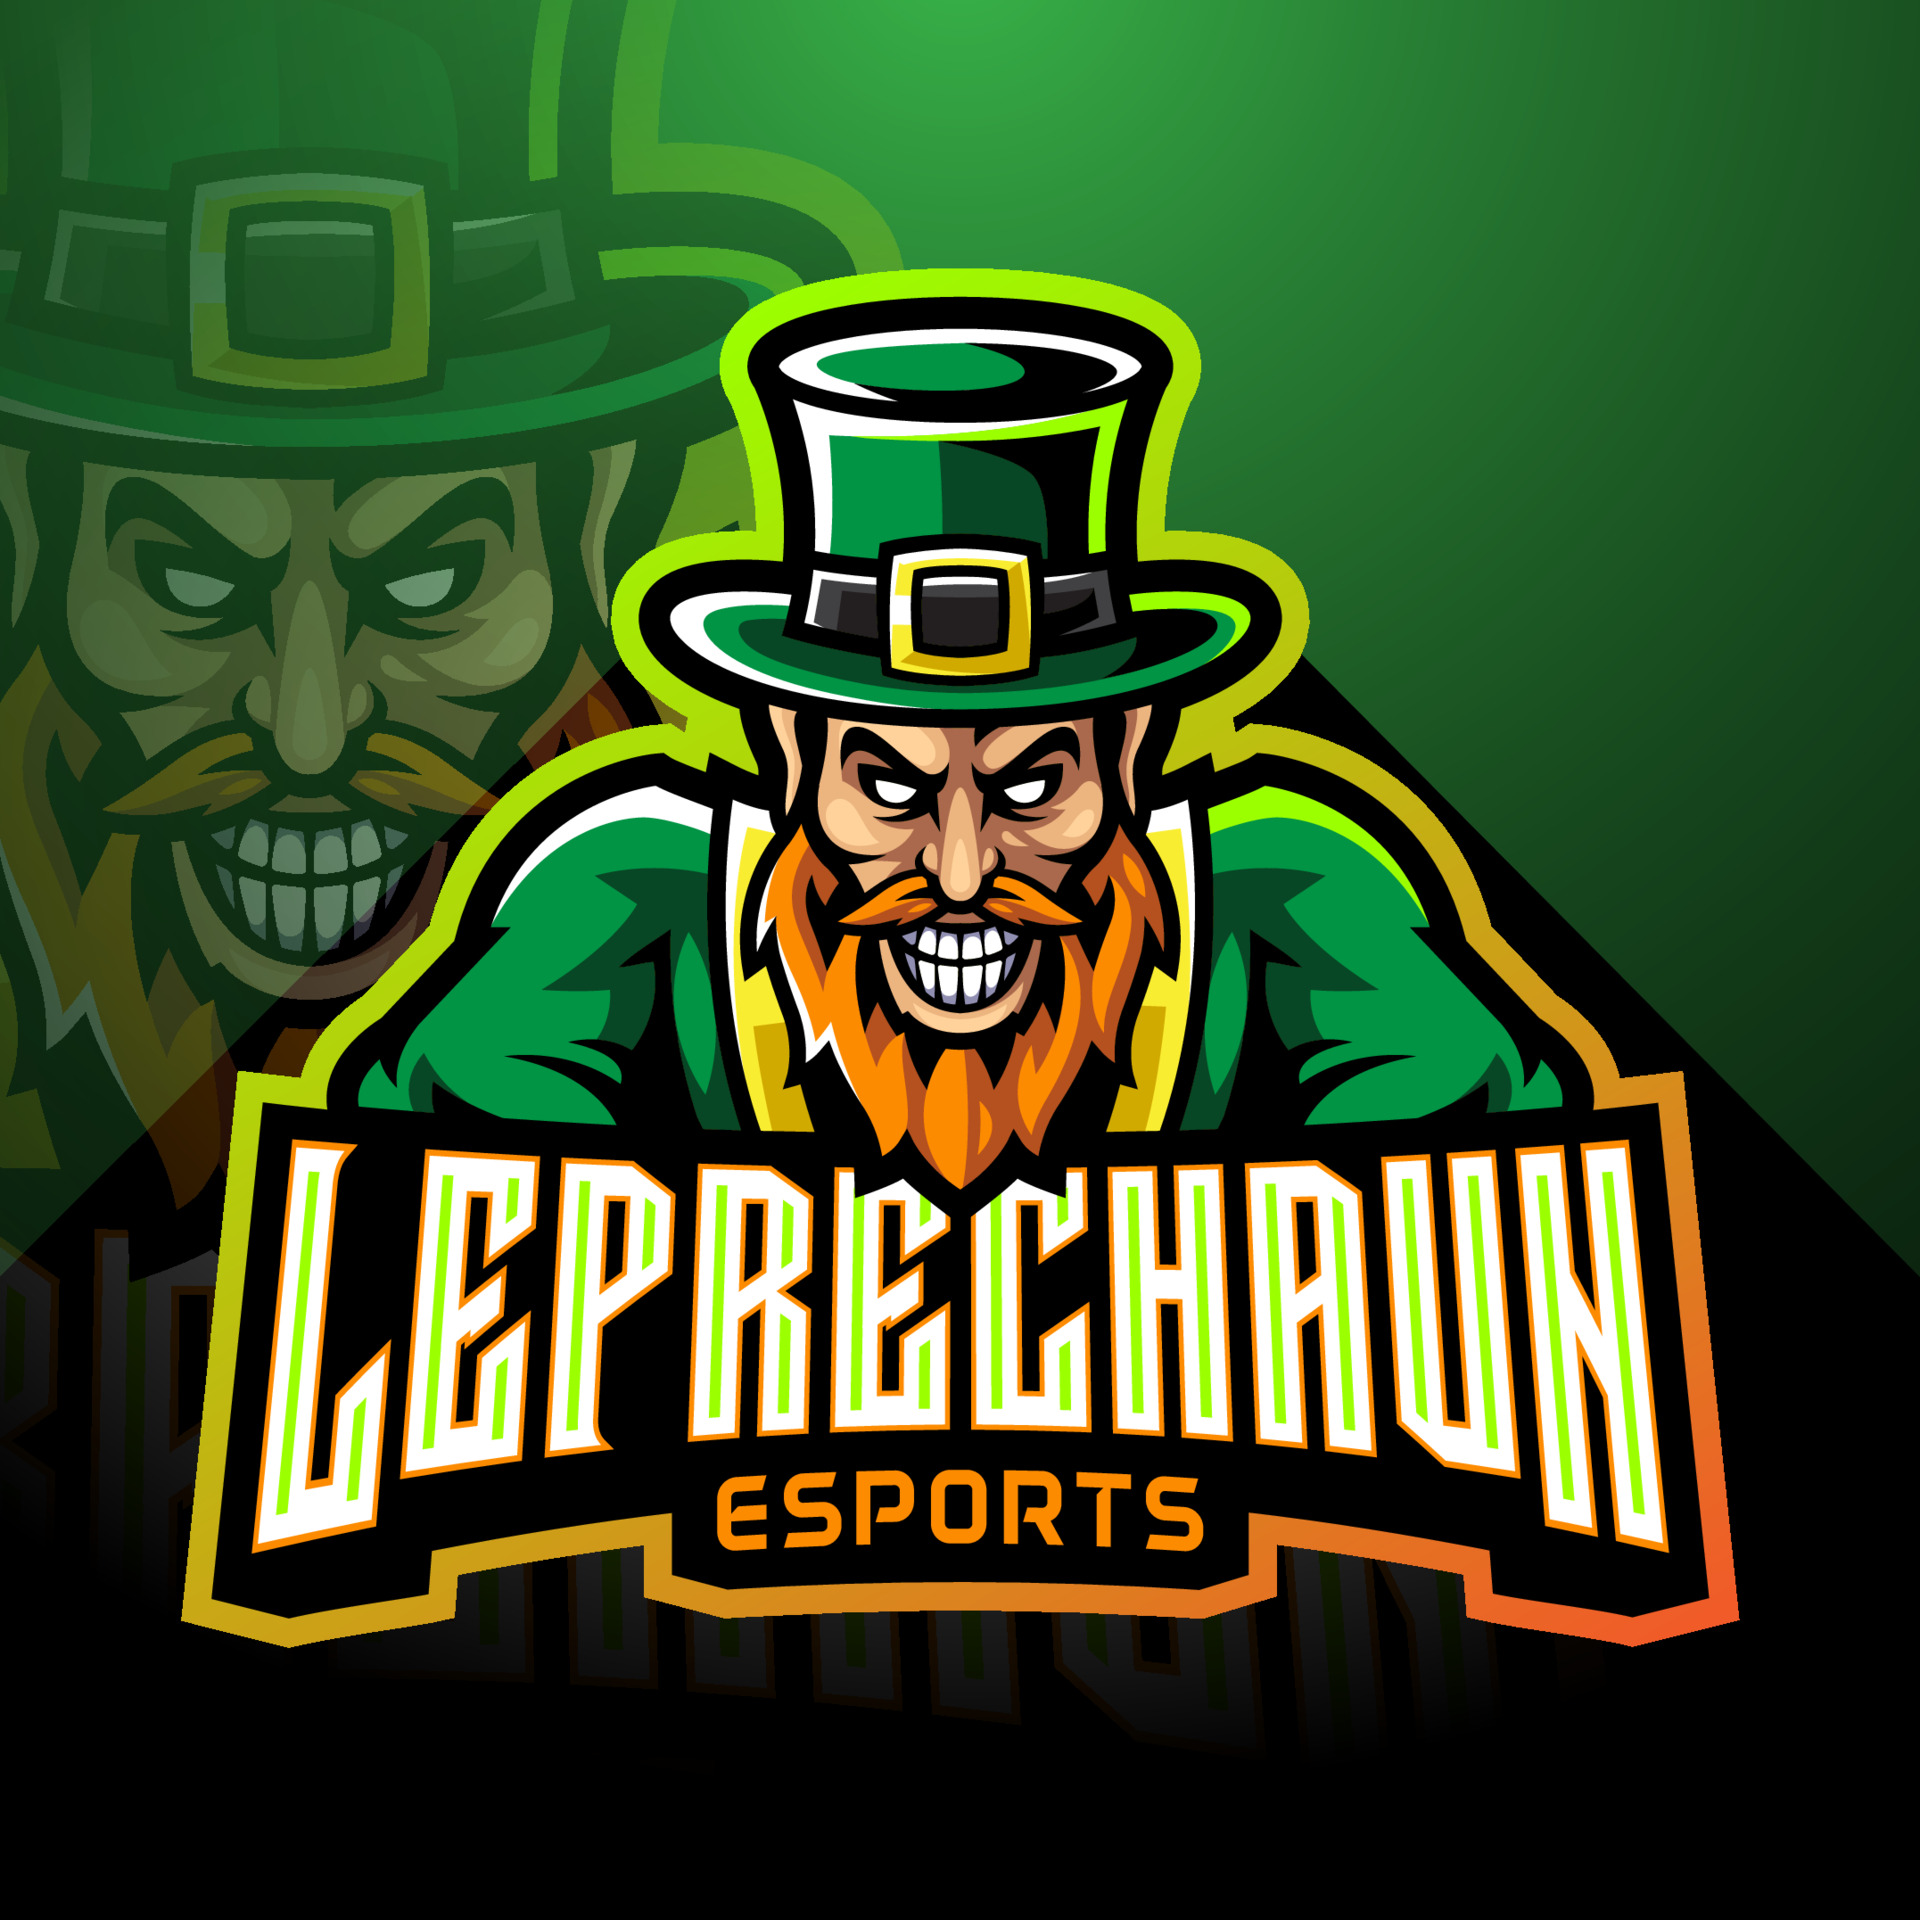 Leprechaun esport mascot logo design 3781662 Vector Art at Vecteezy